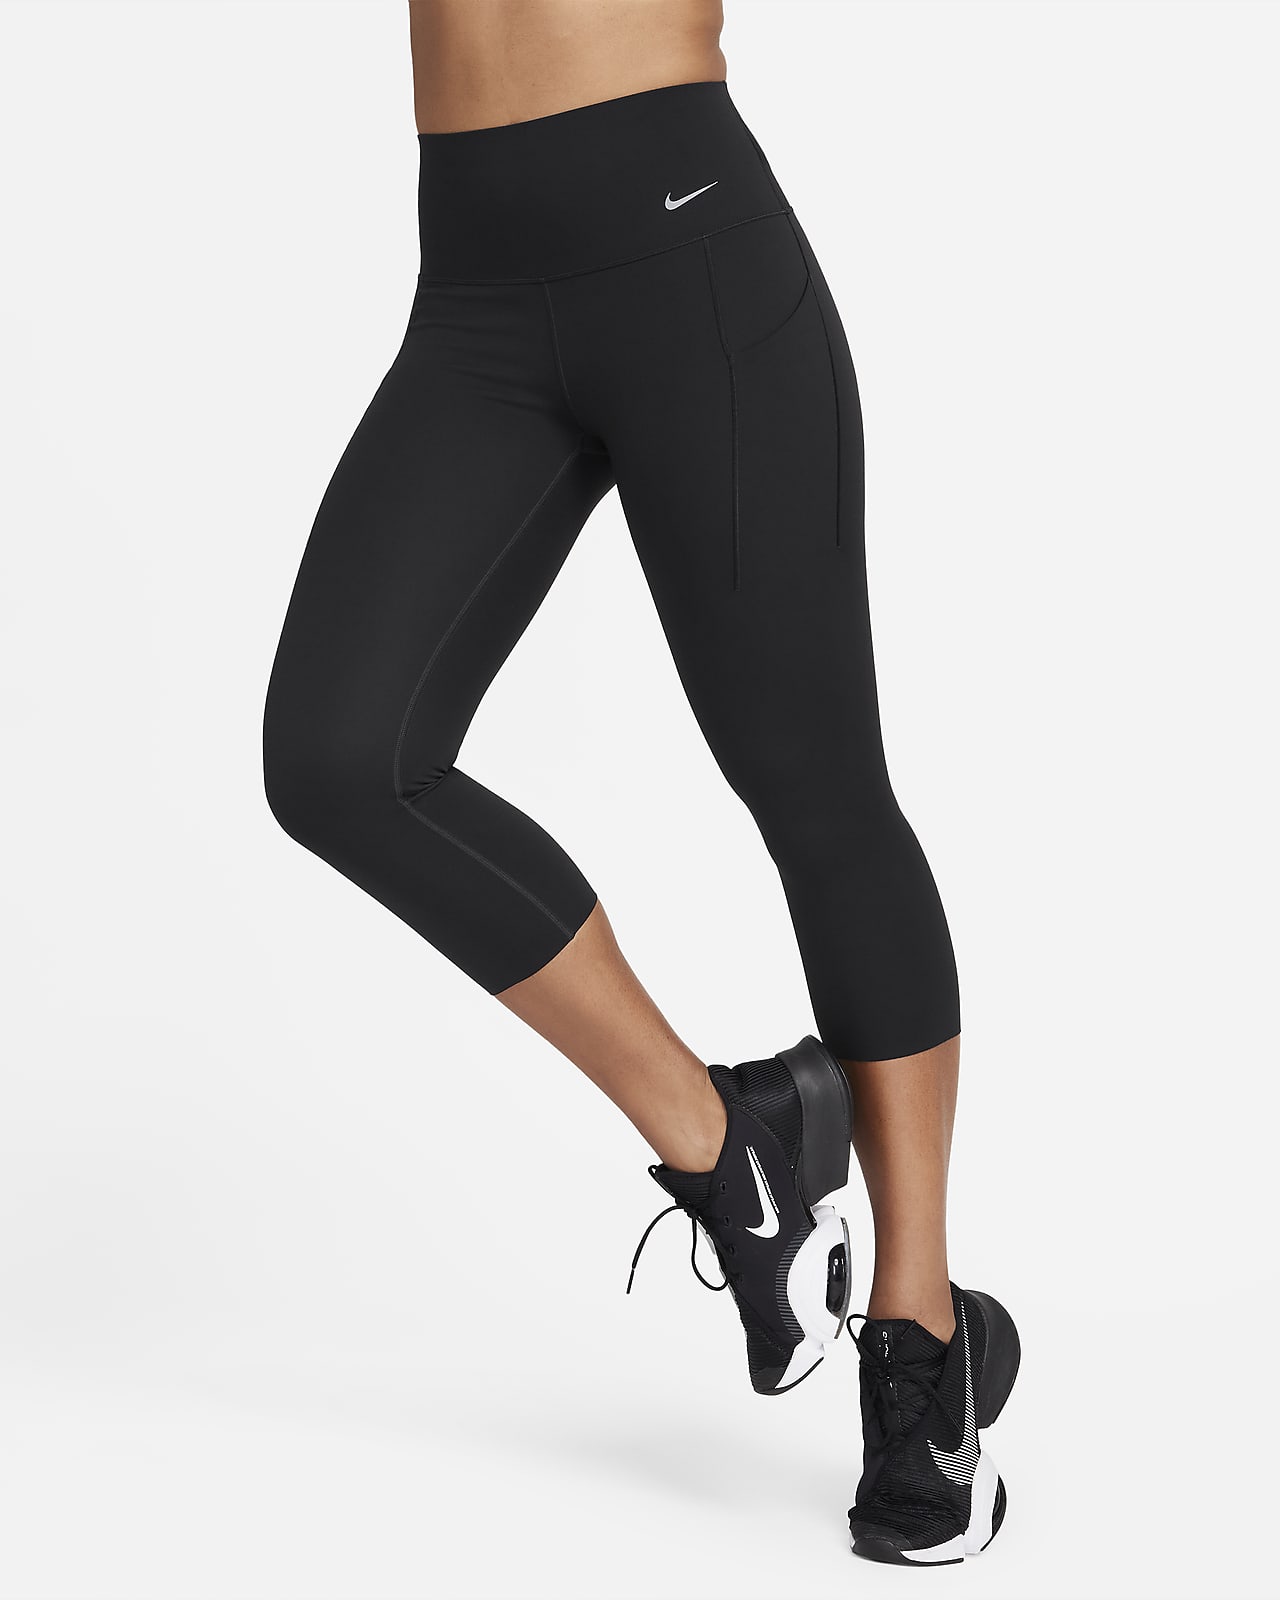 Women's Back to sports Pockets Tights & Leggings. Nike FI